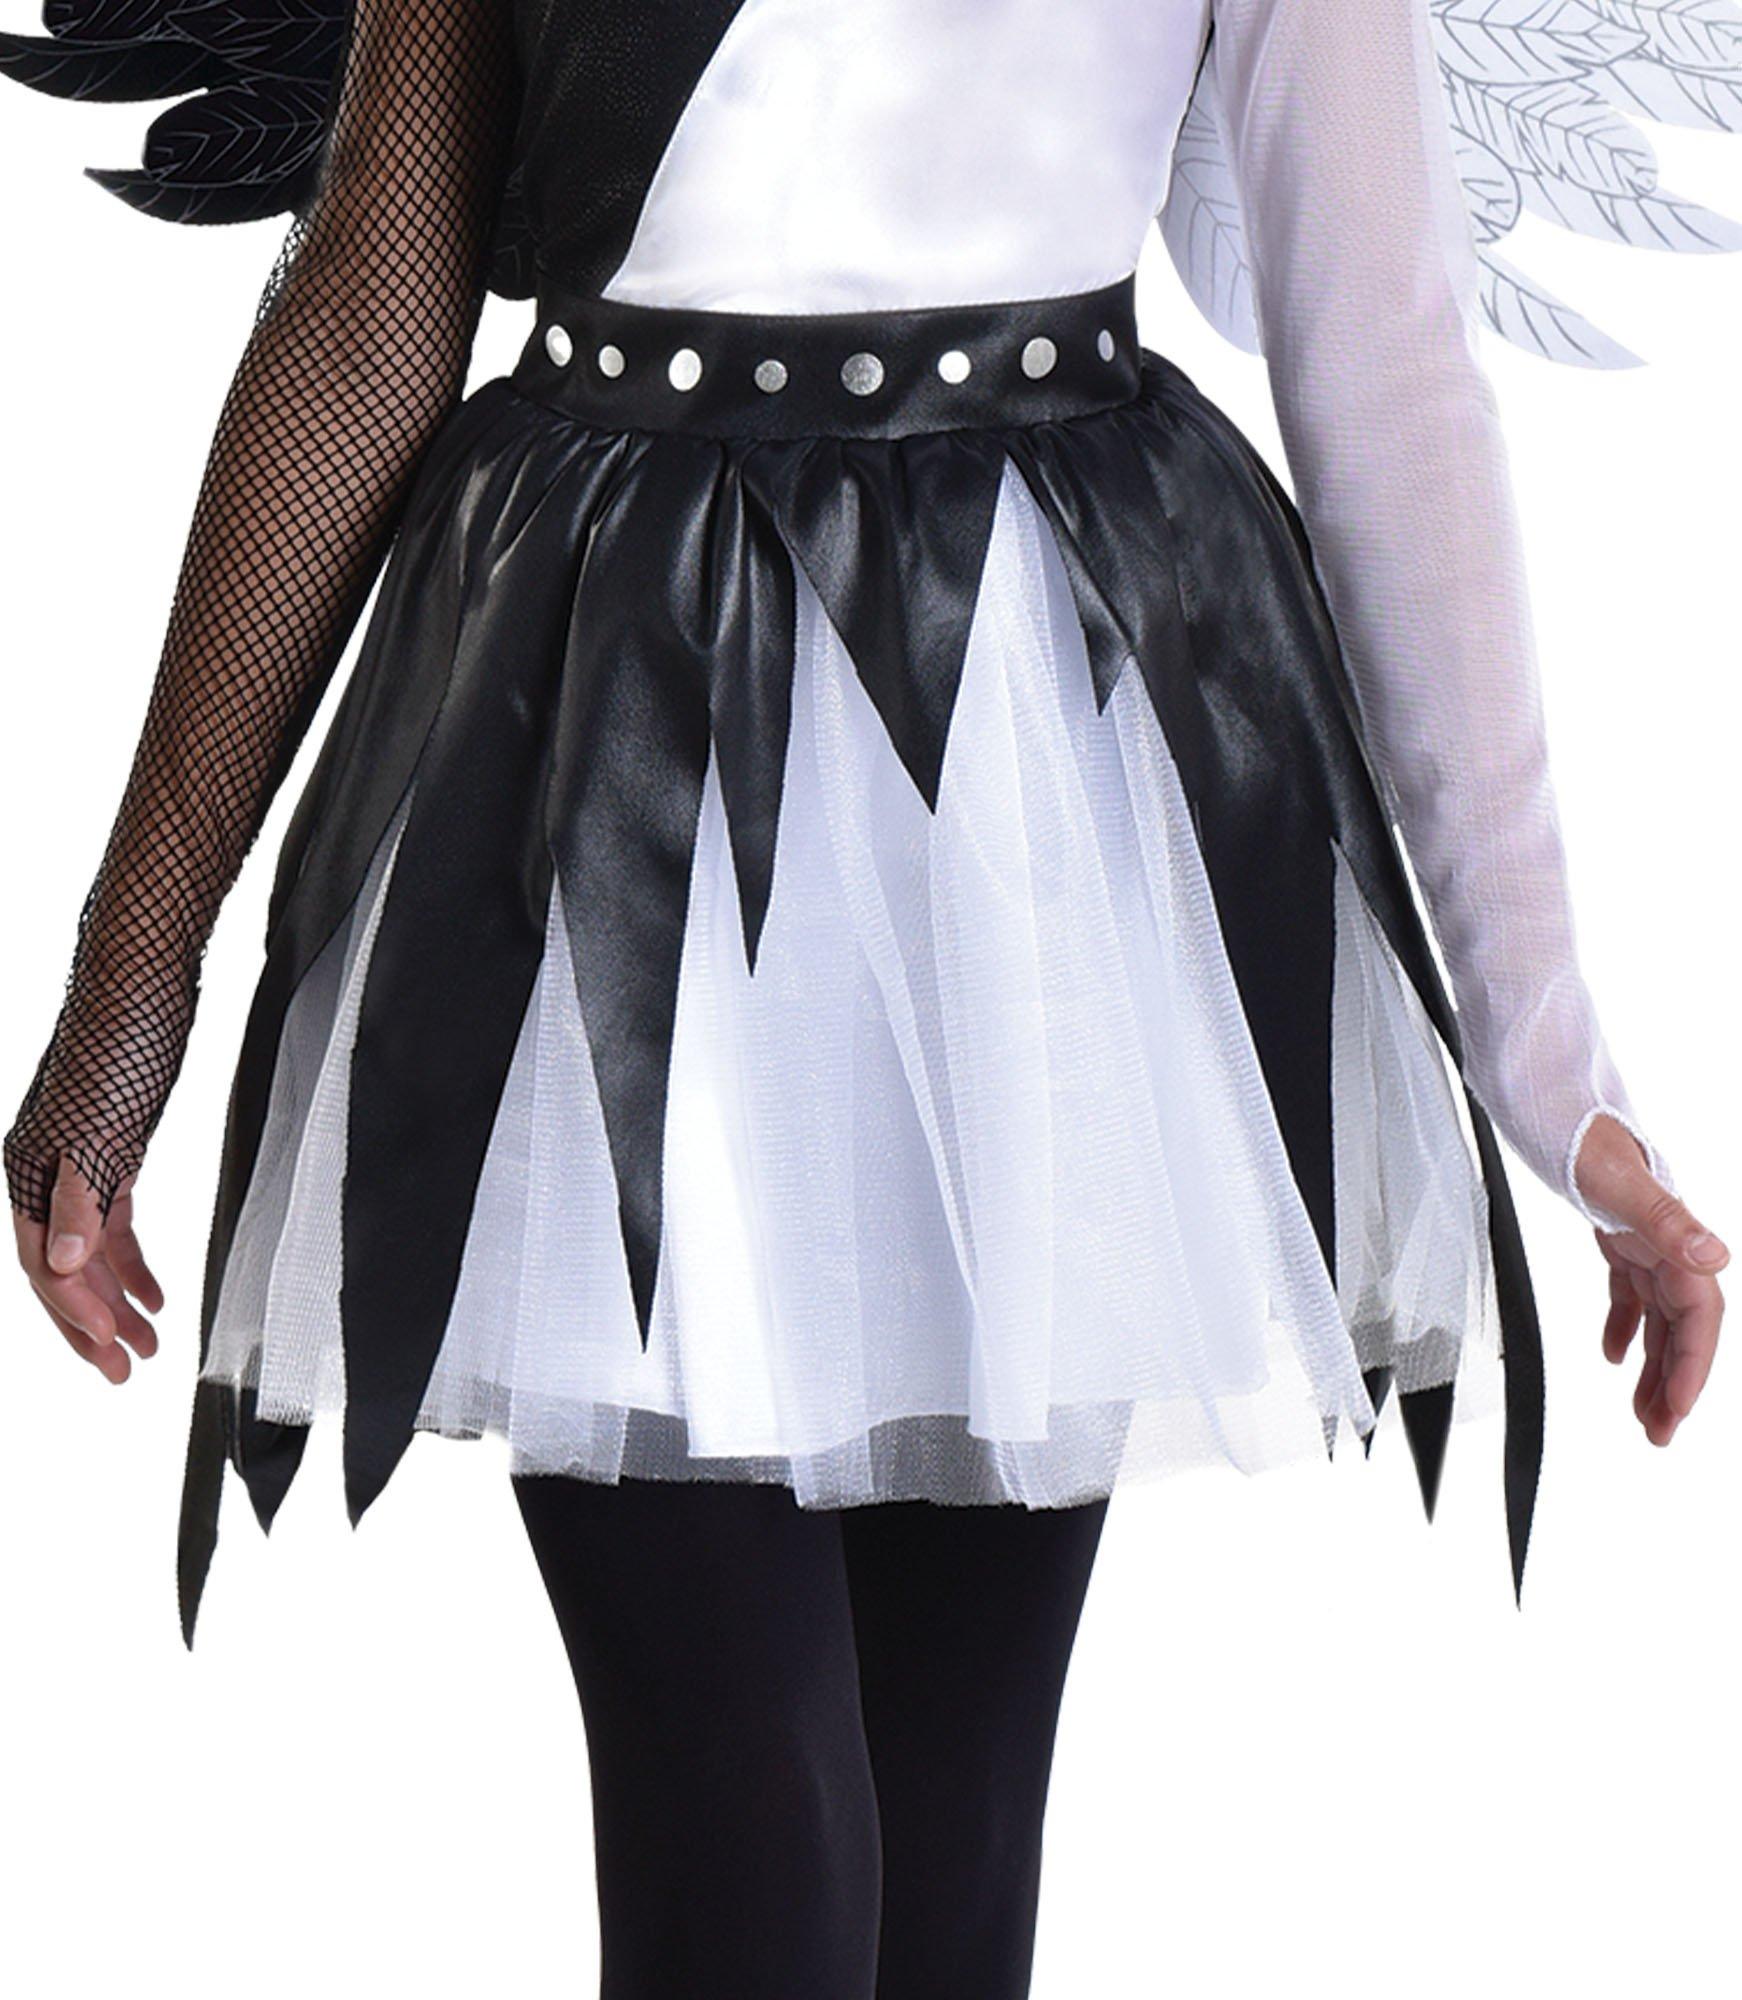 Kid's Fallen Angel Costume by Spirit Halloween